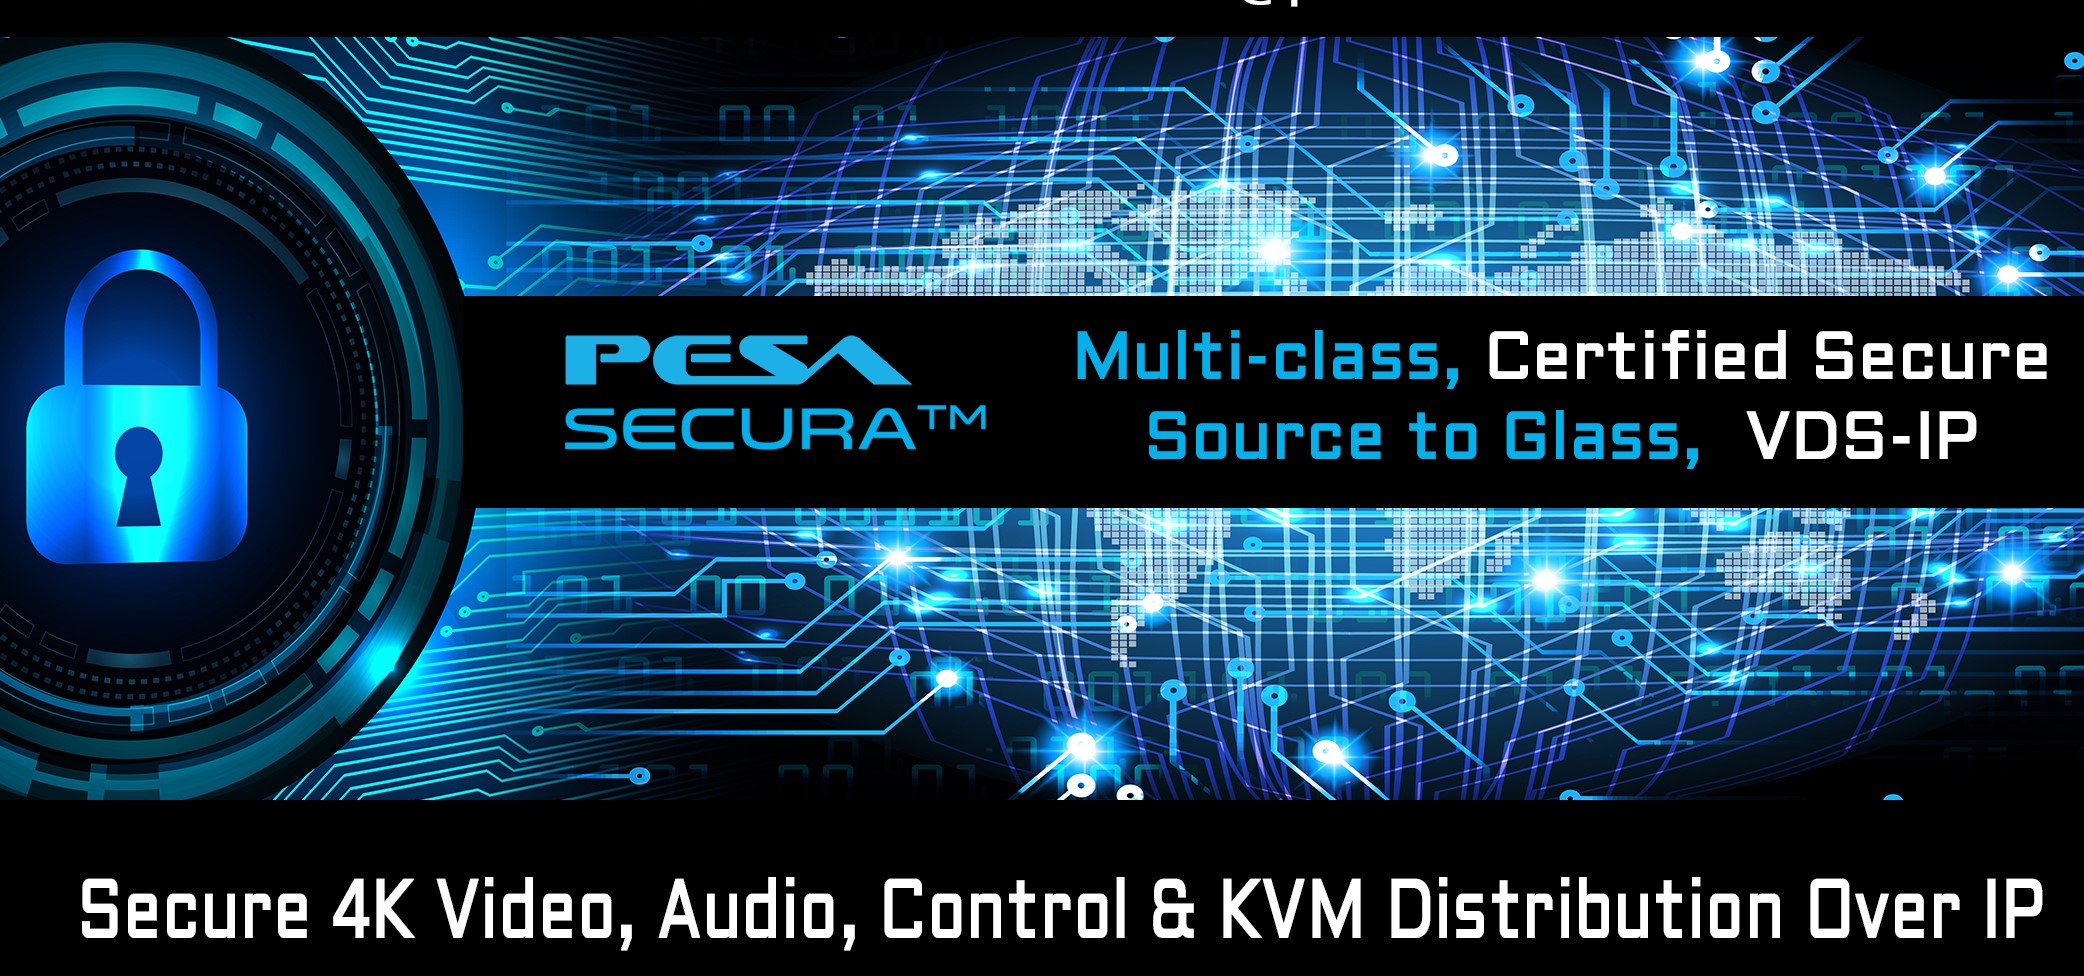 PESA Ssecura VDS IP Platform